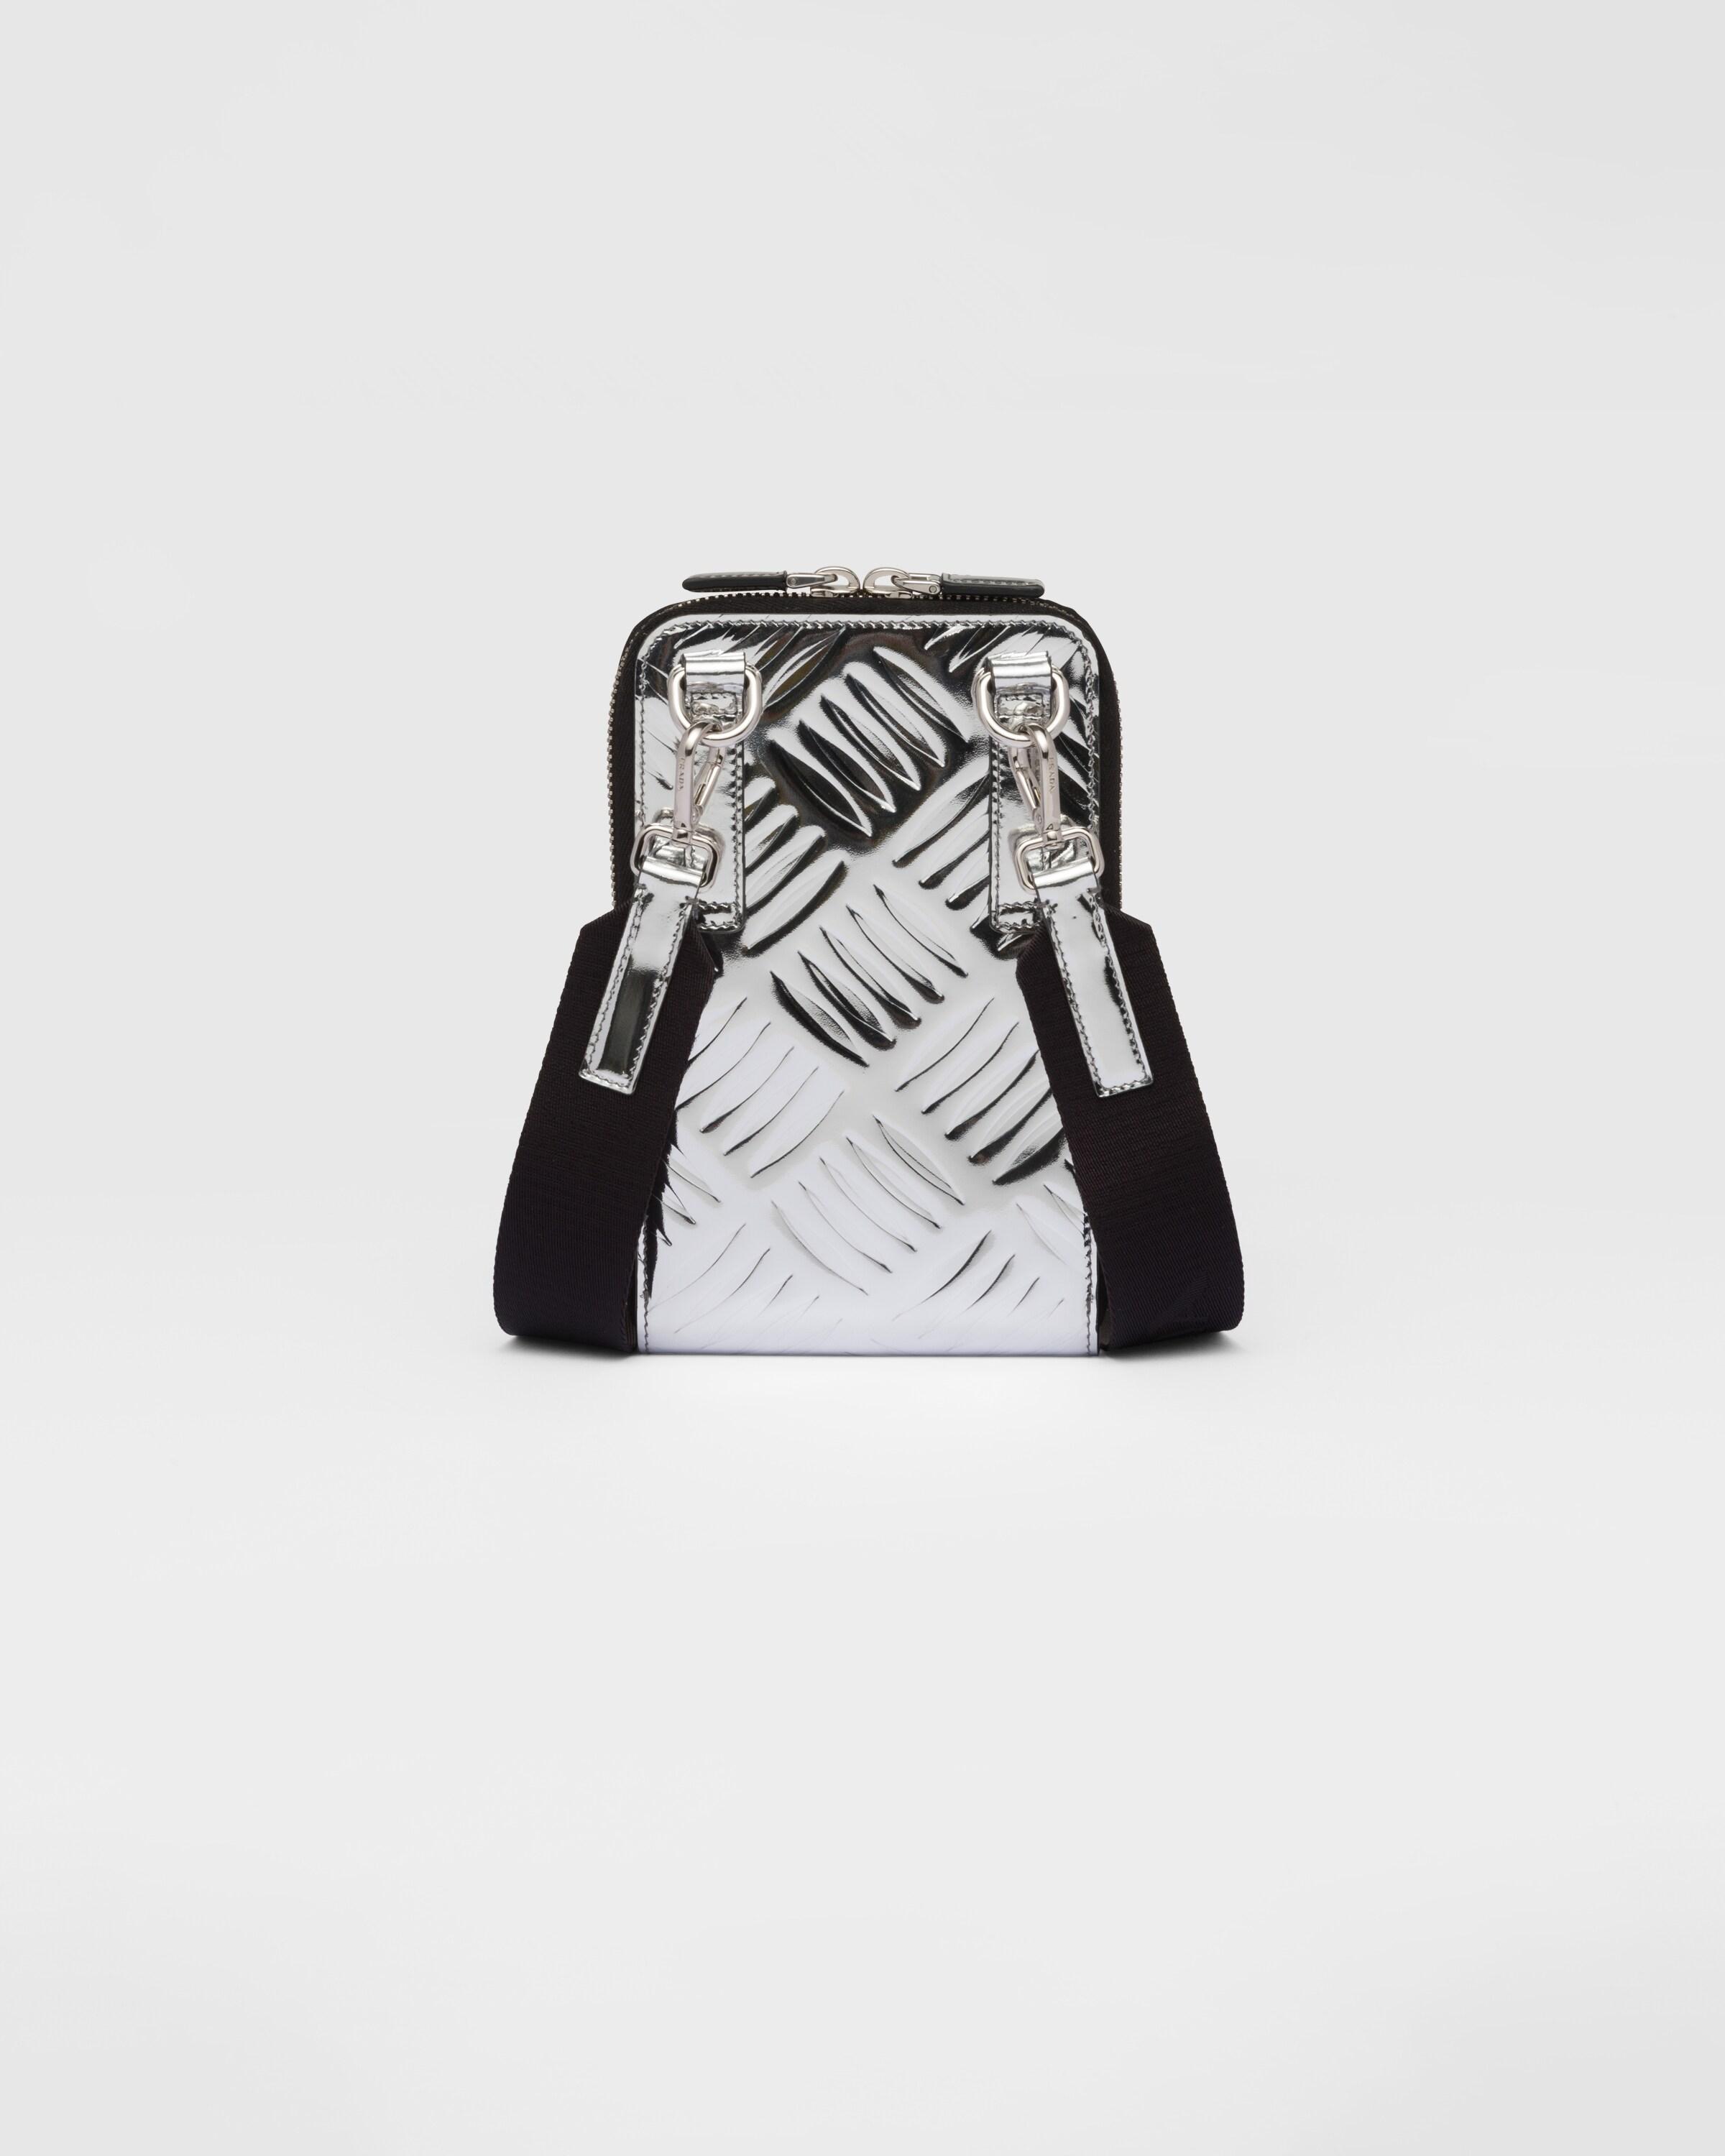 Prada enamel-logo Leather Smartphone Case - White